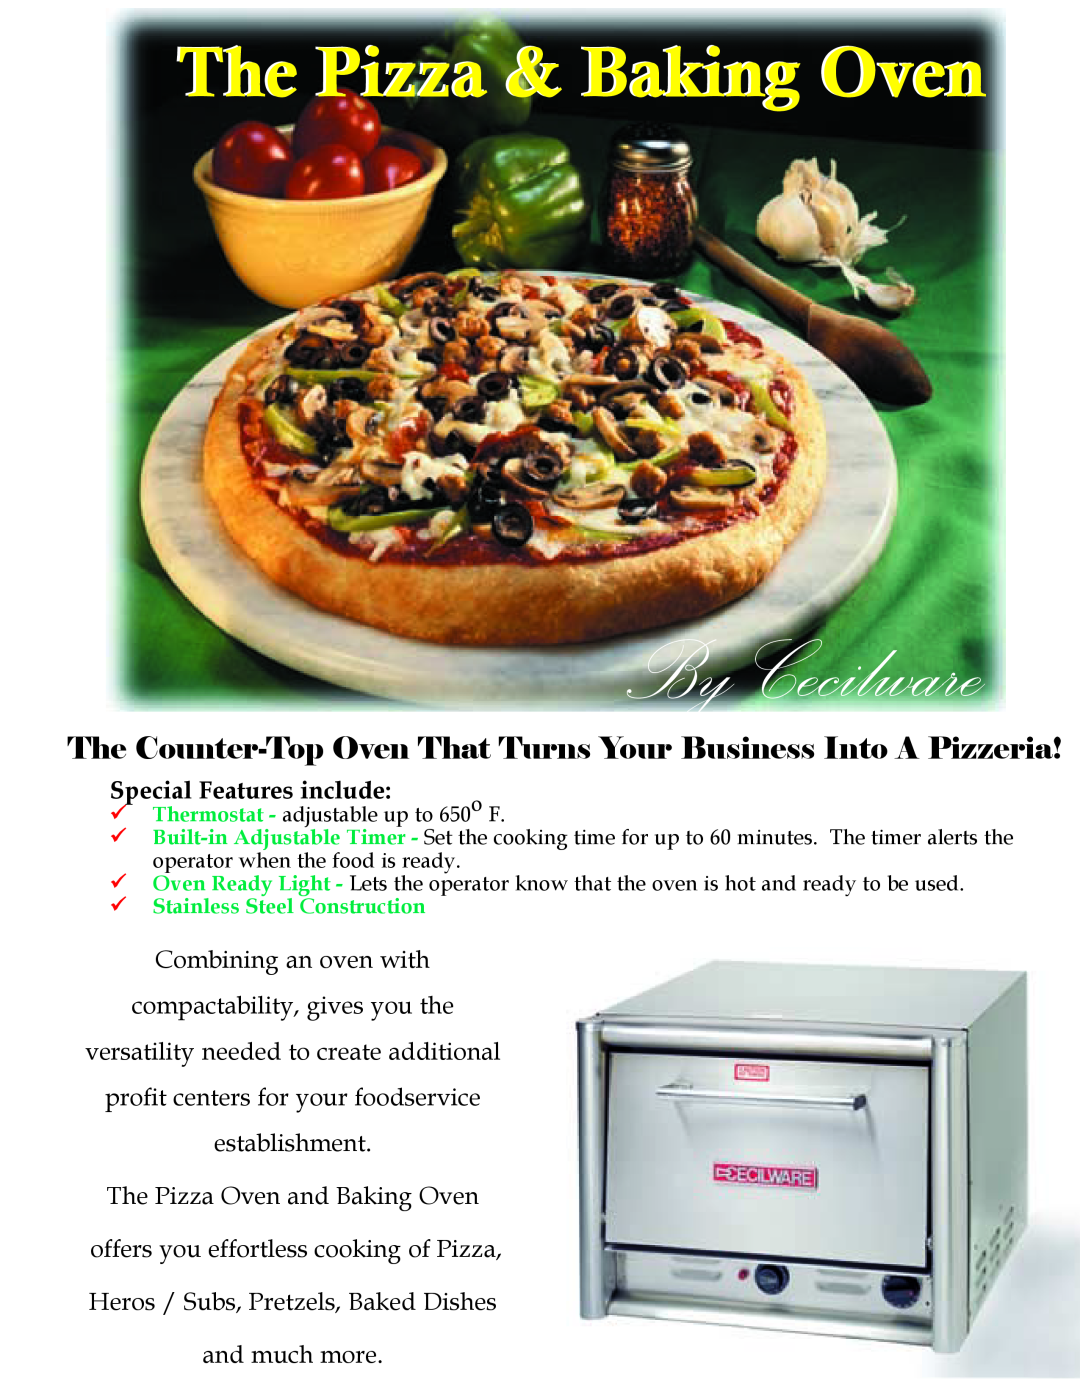 Cecilware PO-18, PO-22 manual By Cecilware, The Pizza & Baking Oven 